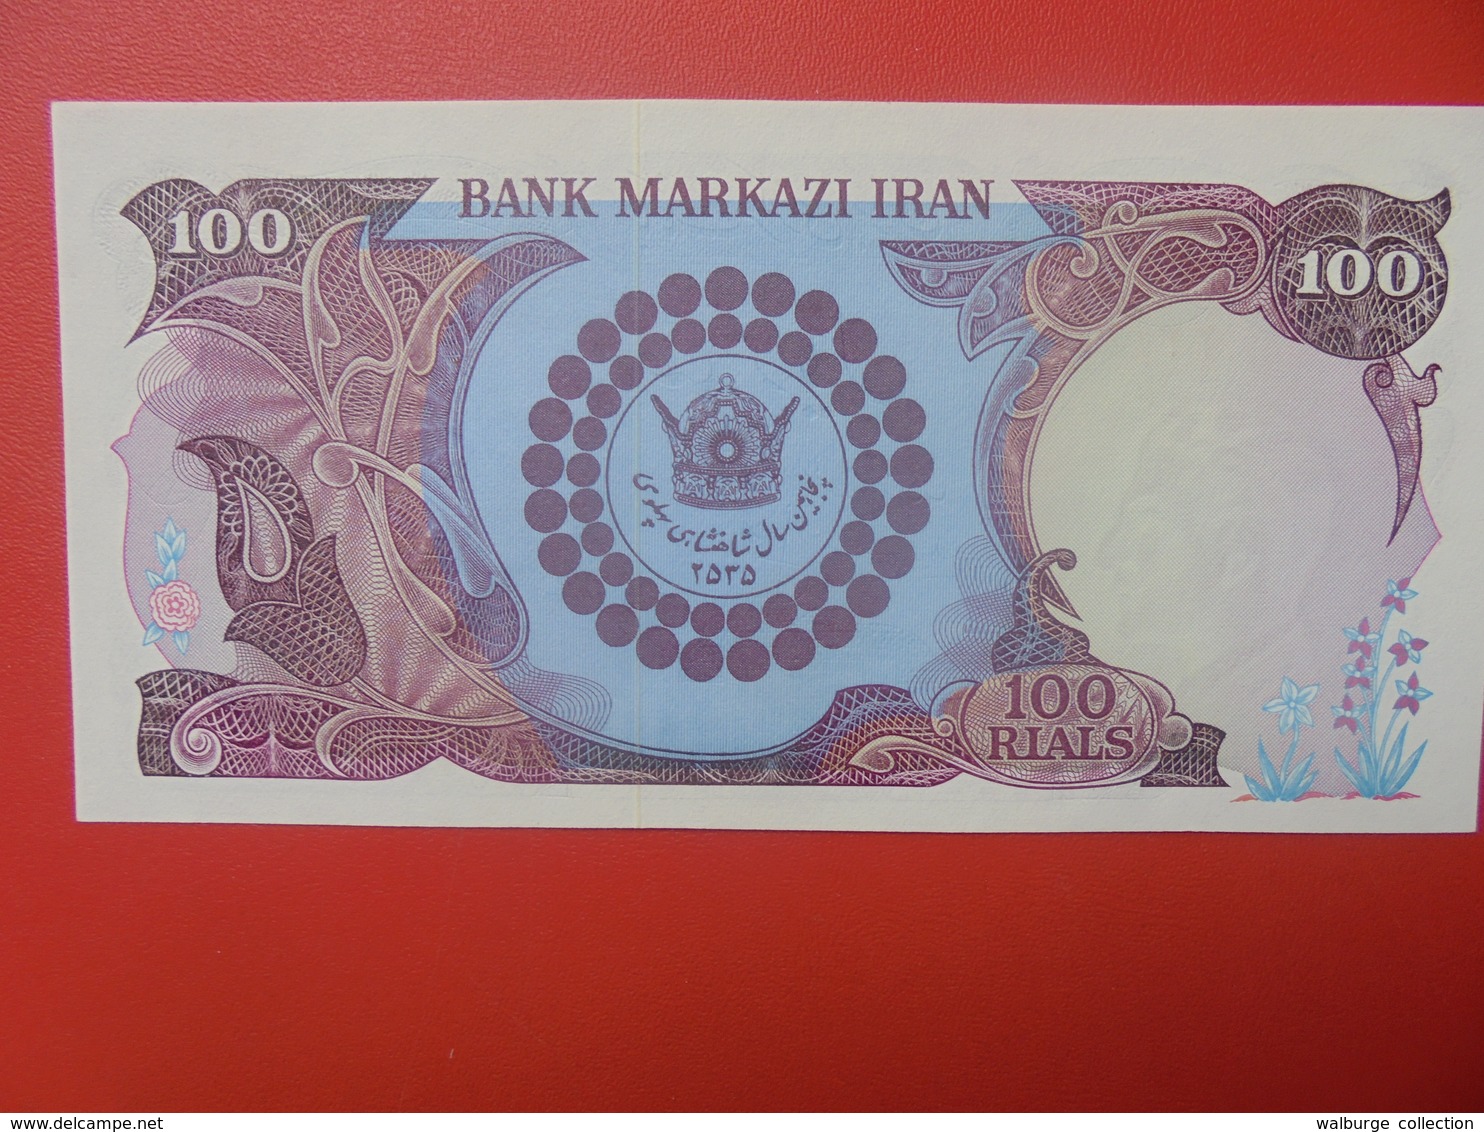 IRAN 100 RIALS 1976 PEU CIRCULER (B.11) - Iran